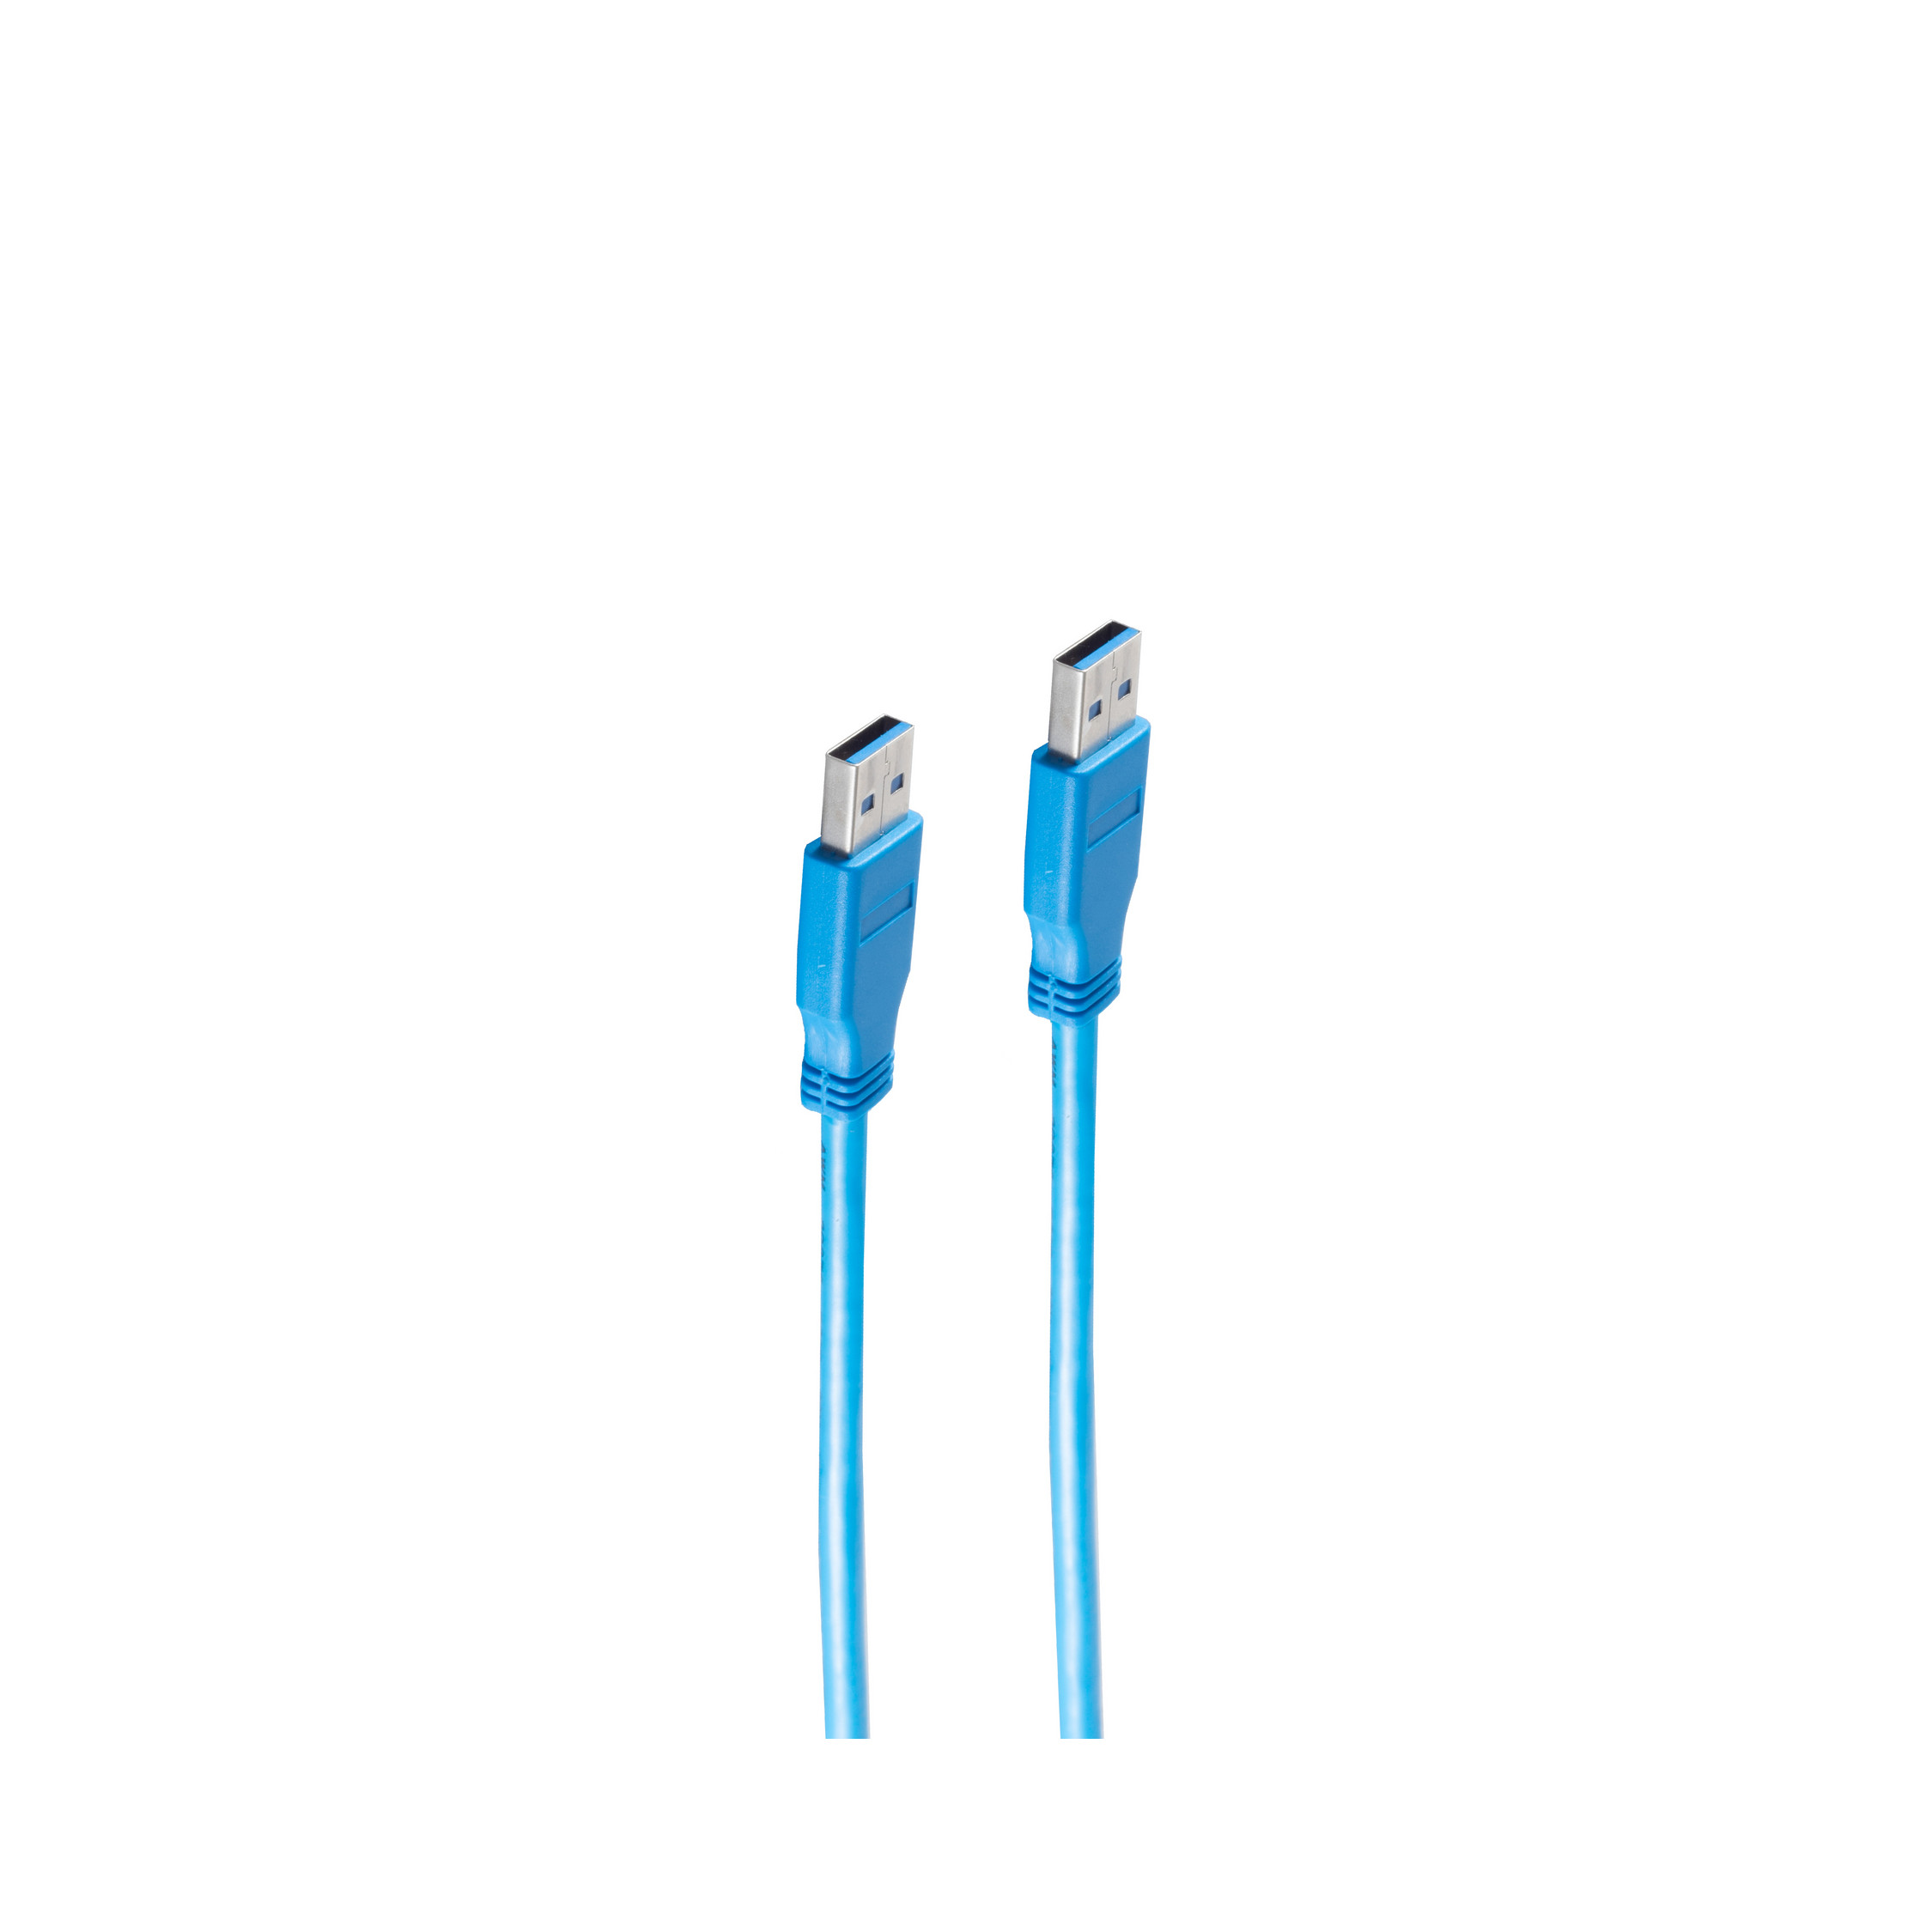 Kabel Stecker A 3.0 5m USB / USB blau USB Stecker SHIVERPEAKS A Kabel